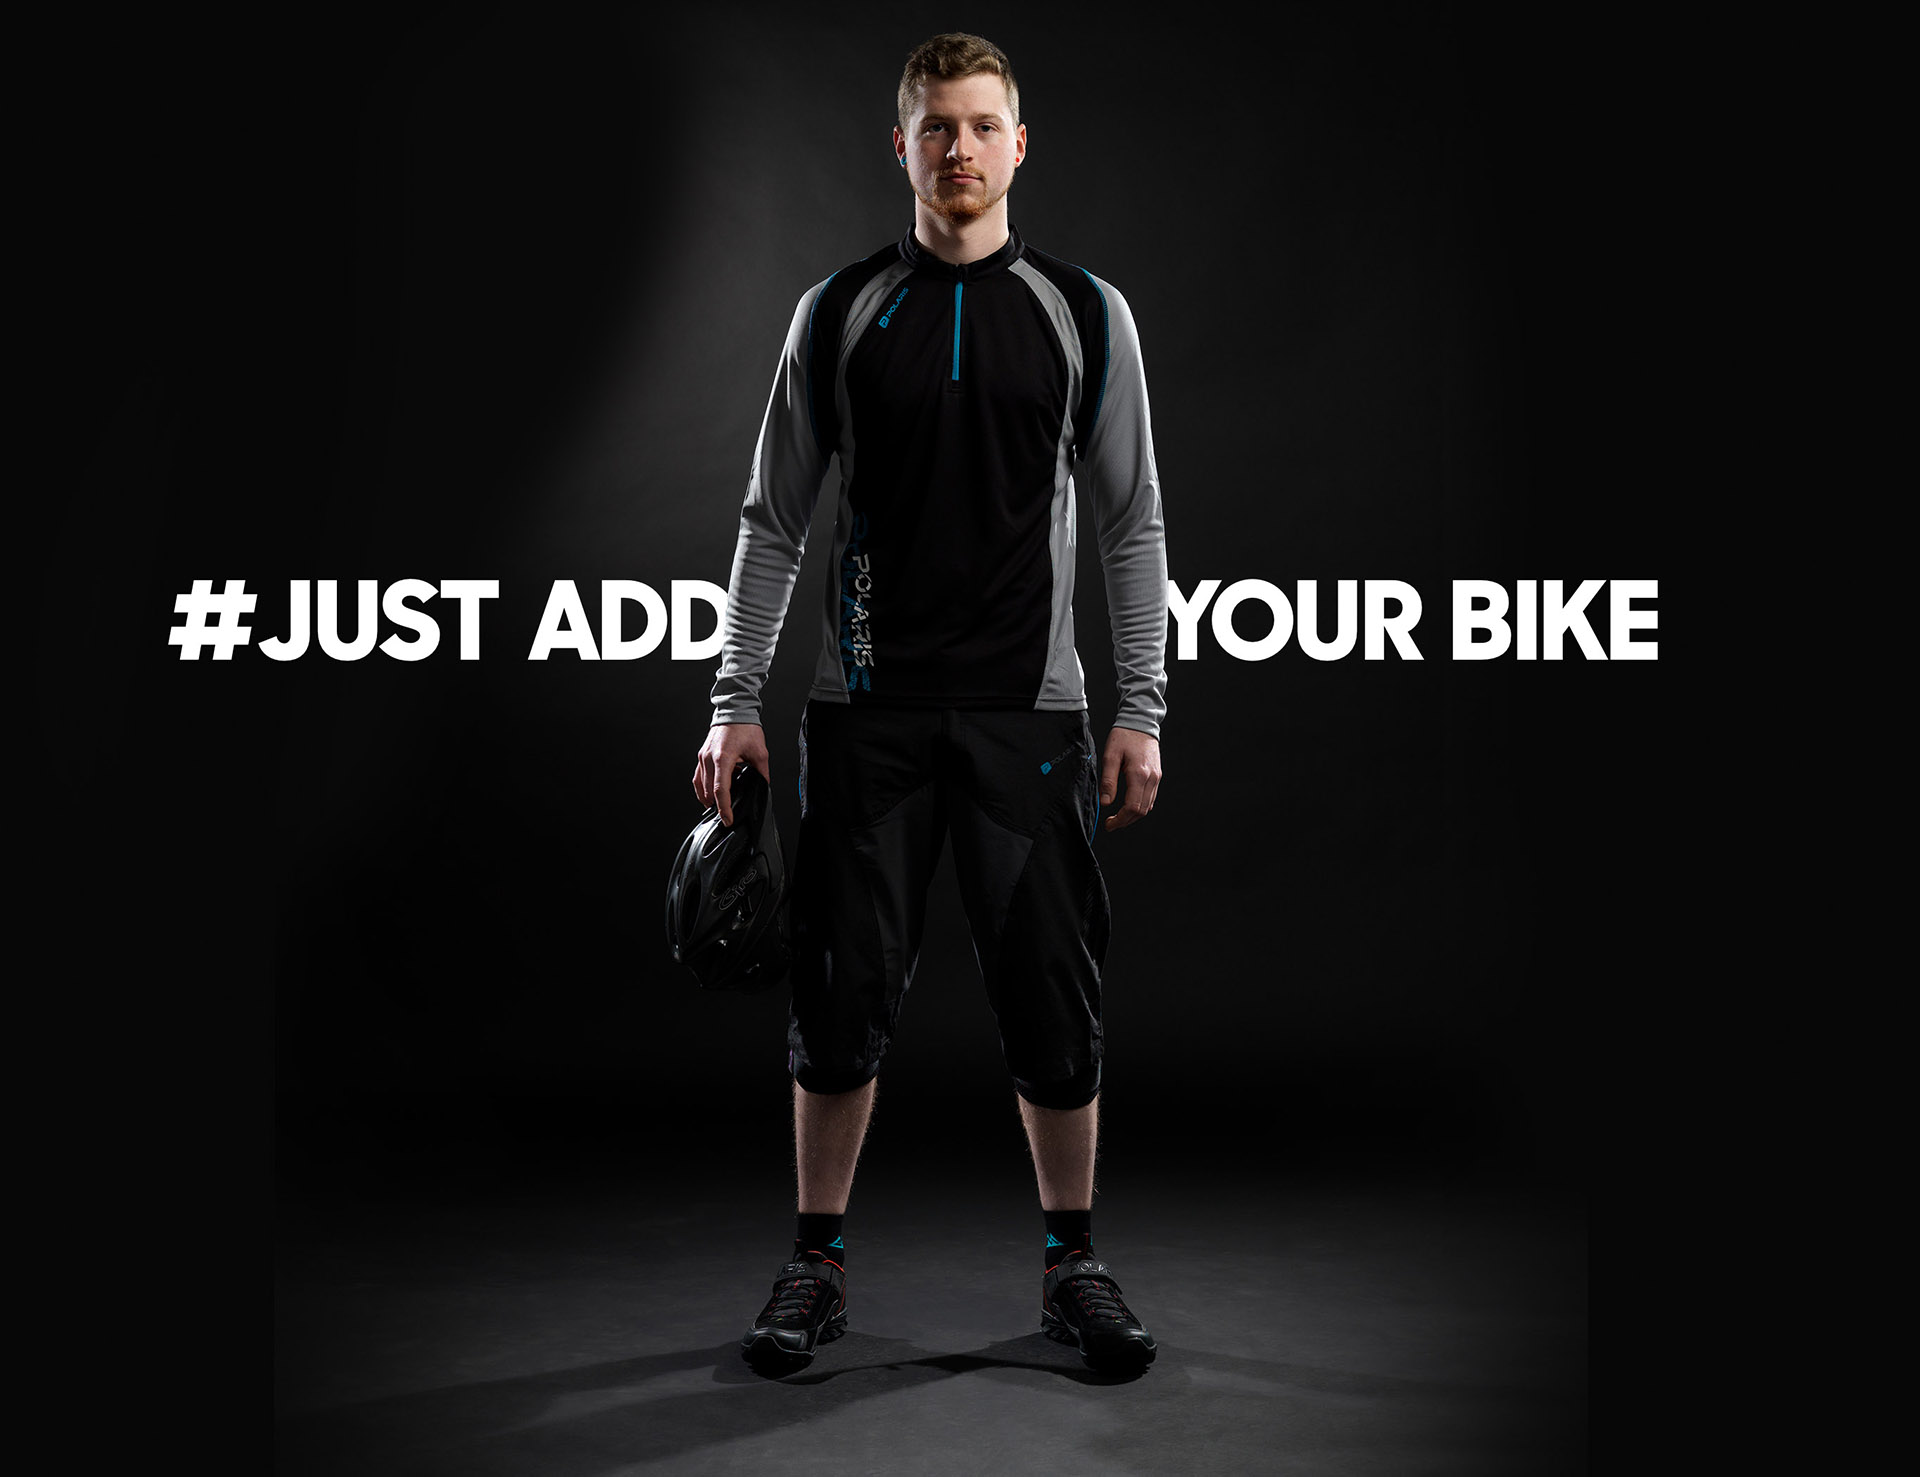 polaris bikewear advertising design by Leeds based Freelance Designer Neil Holroyd